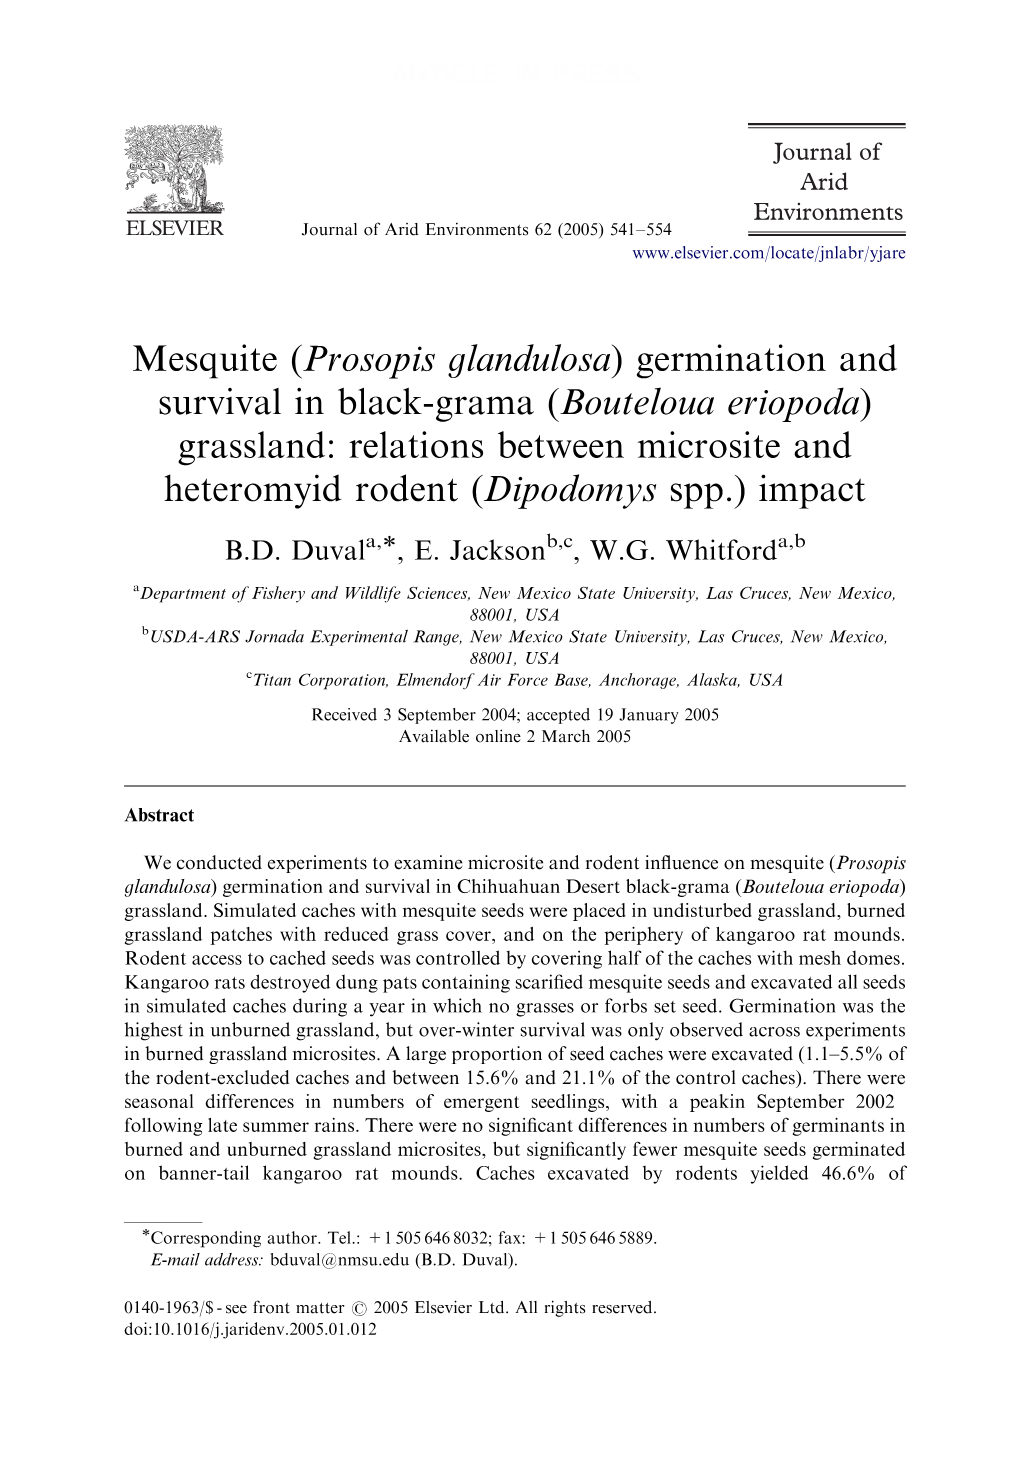 Prosopis Glandulosa) Germination and Survival in Black-Grama (Bouteloua Eriopoda) Grassland: Relations Between Microsite and Heteromyid Rodent (Dipodomys Spp.) Impact